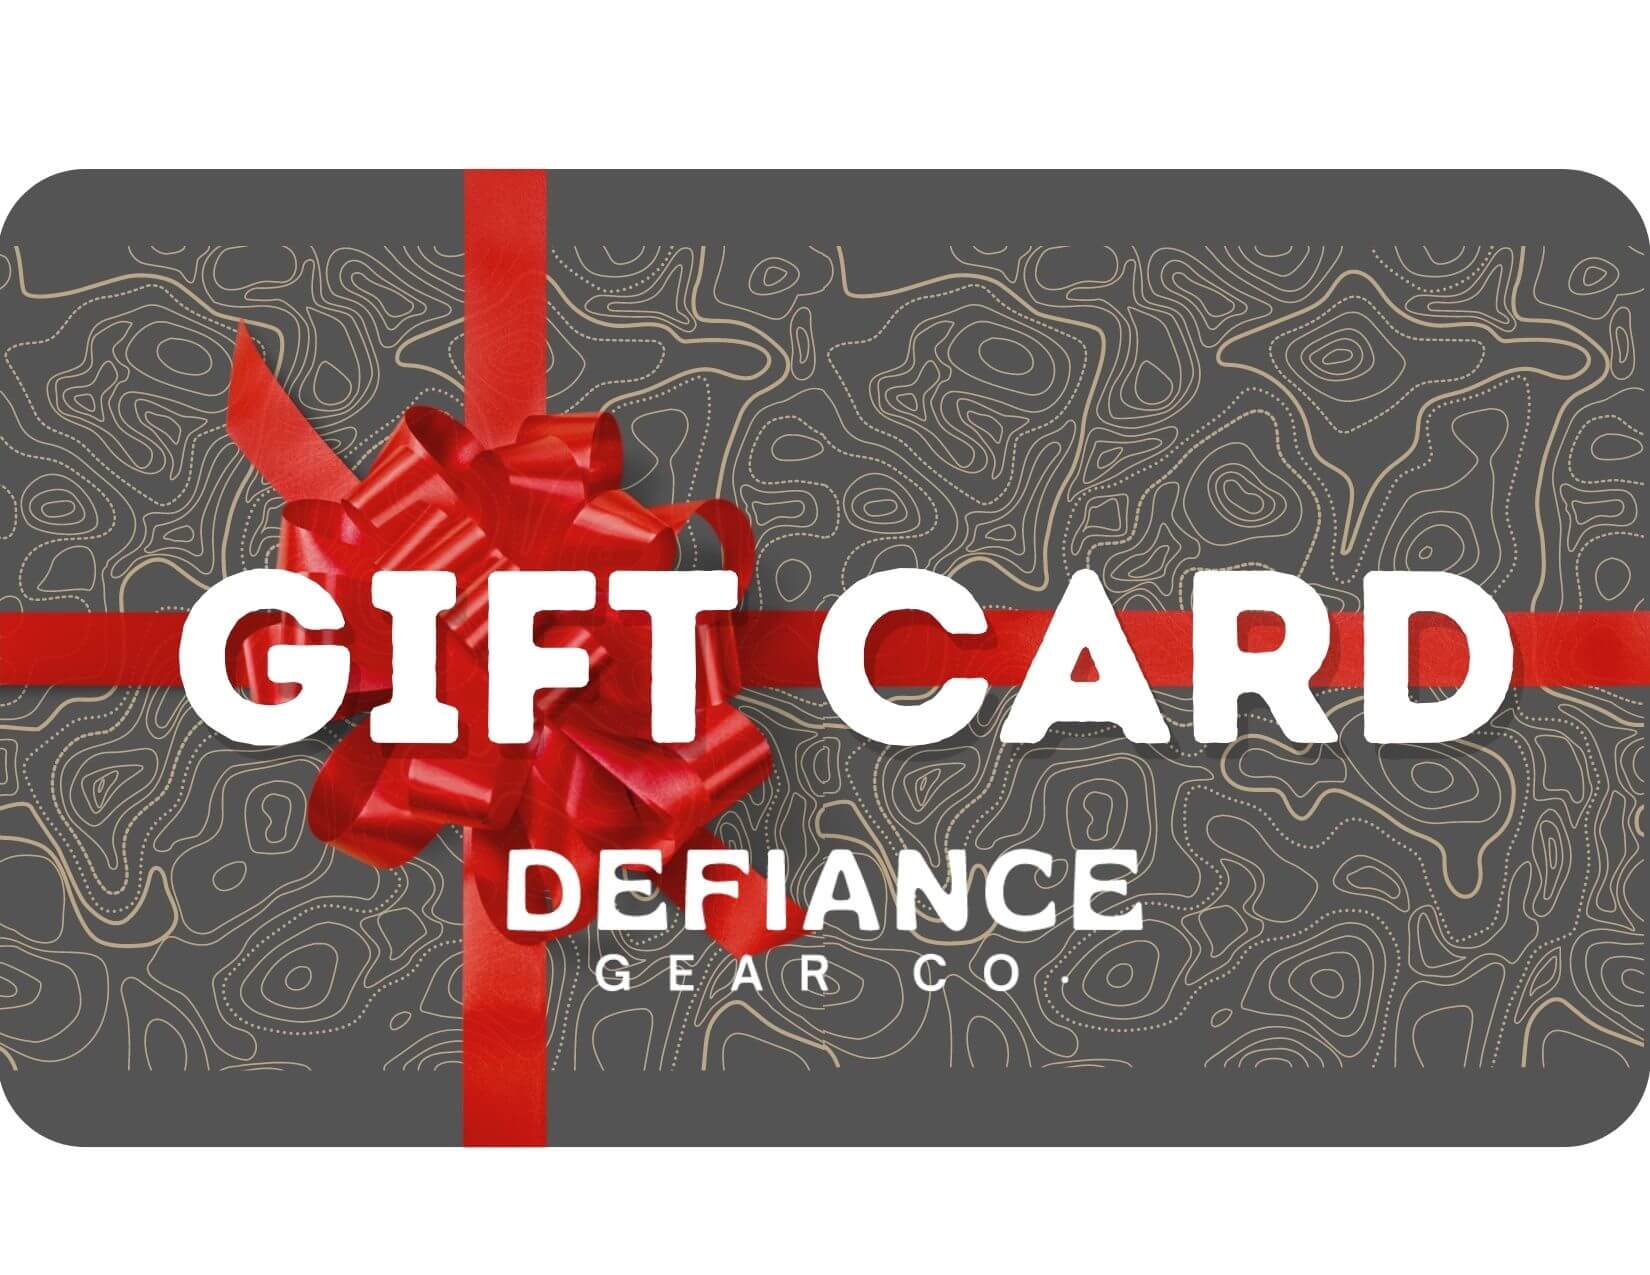 Defiance Gear Co. | Gift Card, Gift Card, Defiance Gear Co., Defiance Outdoor Gear Co.